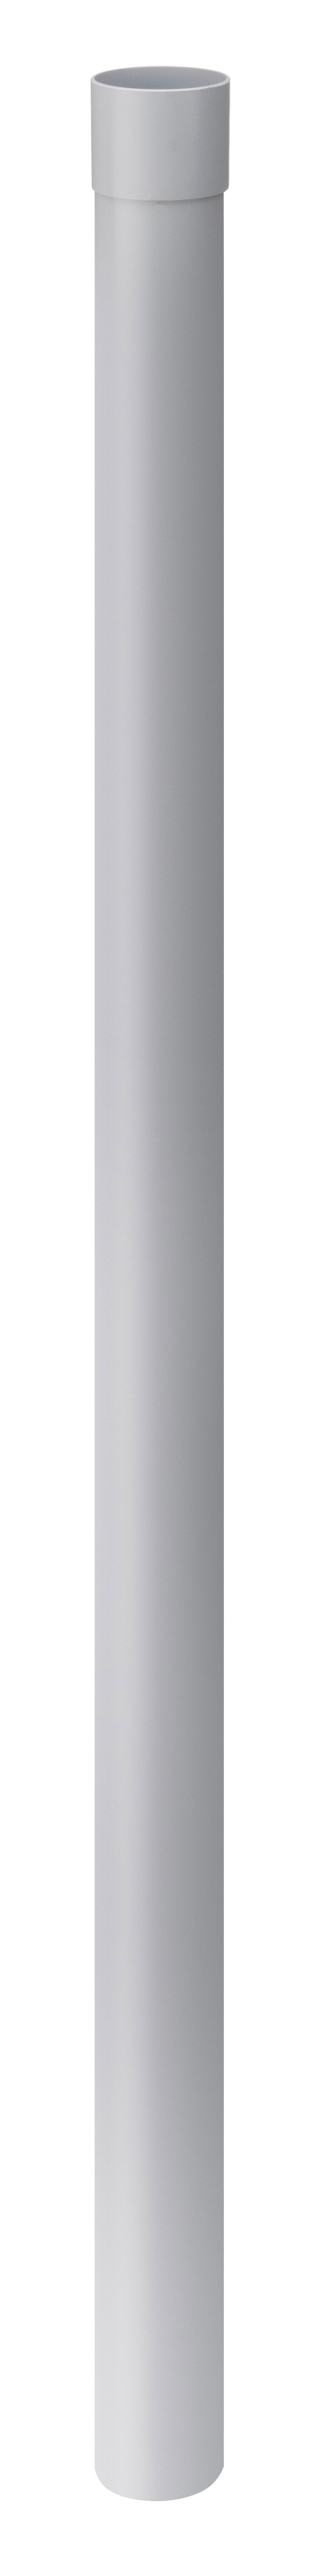 Inefa-Fallrohr NW 85 - 2 m grau 82215 incl. Muffe